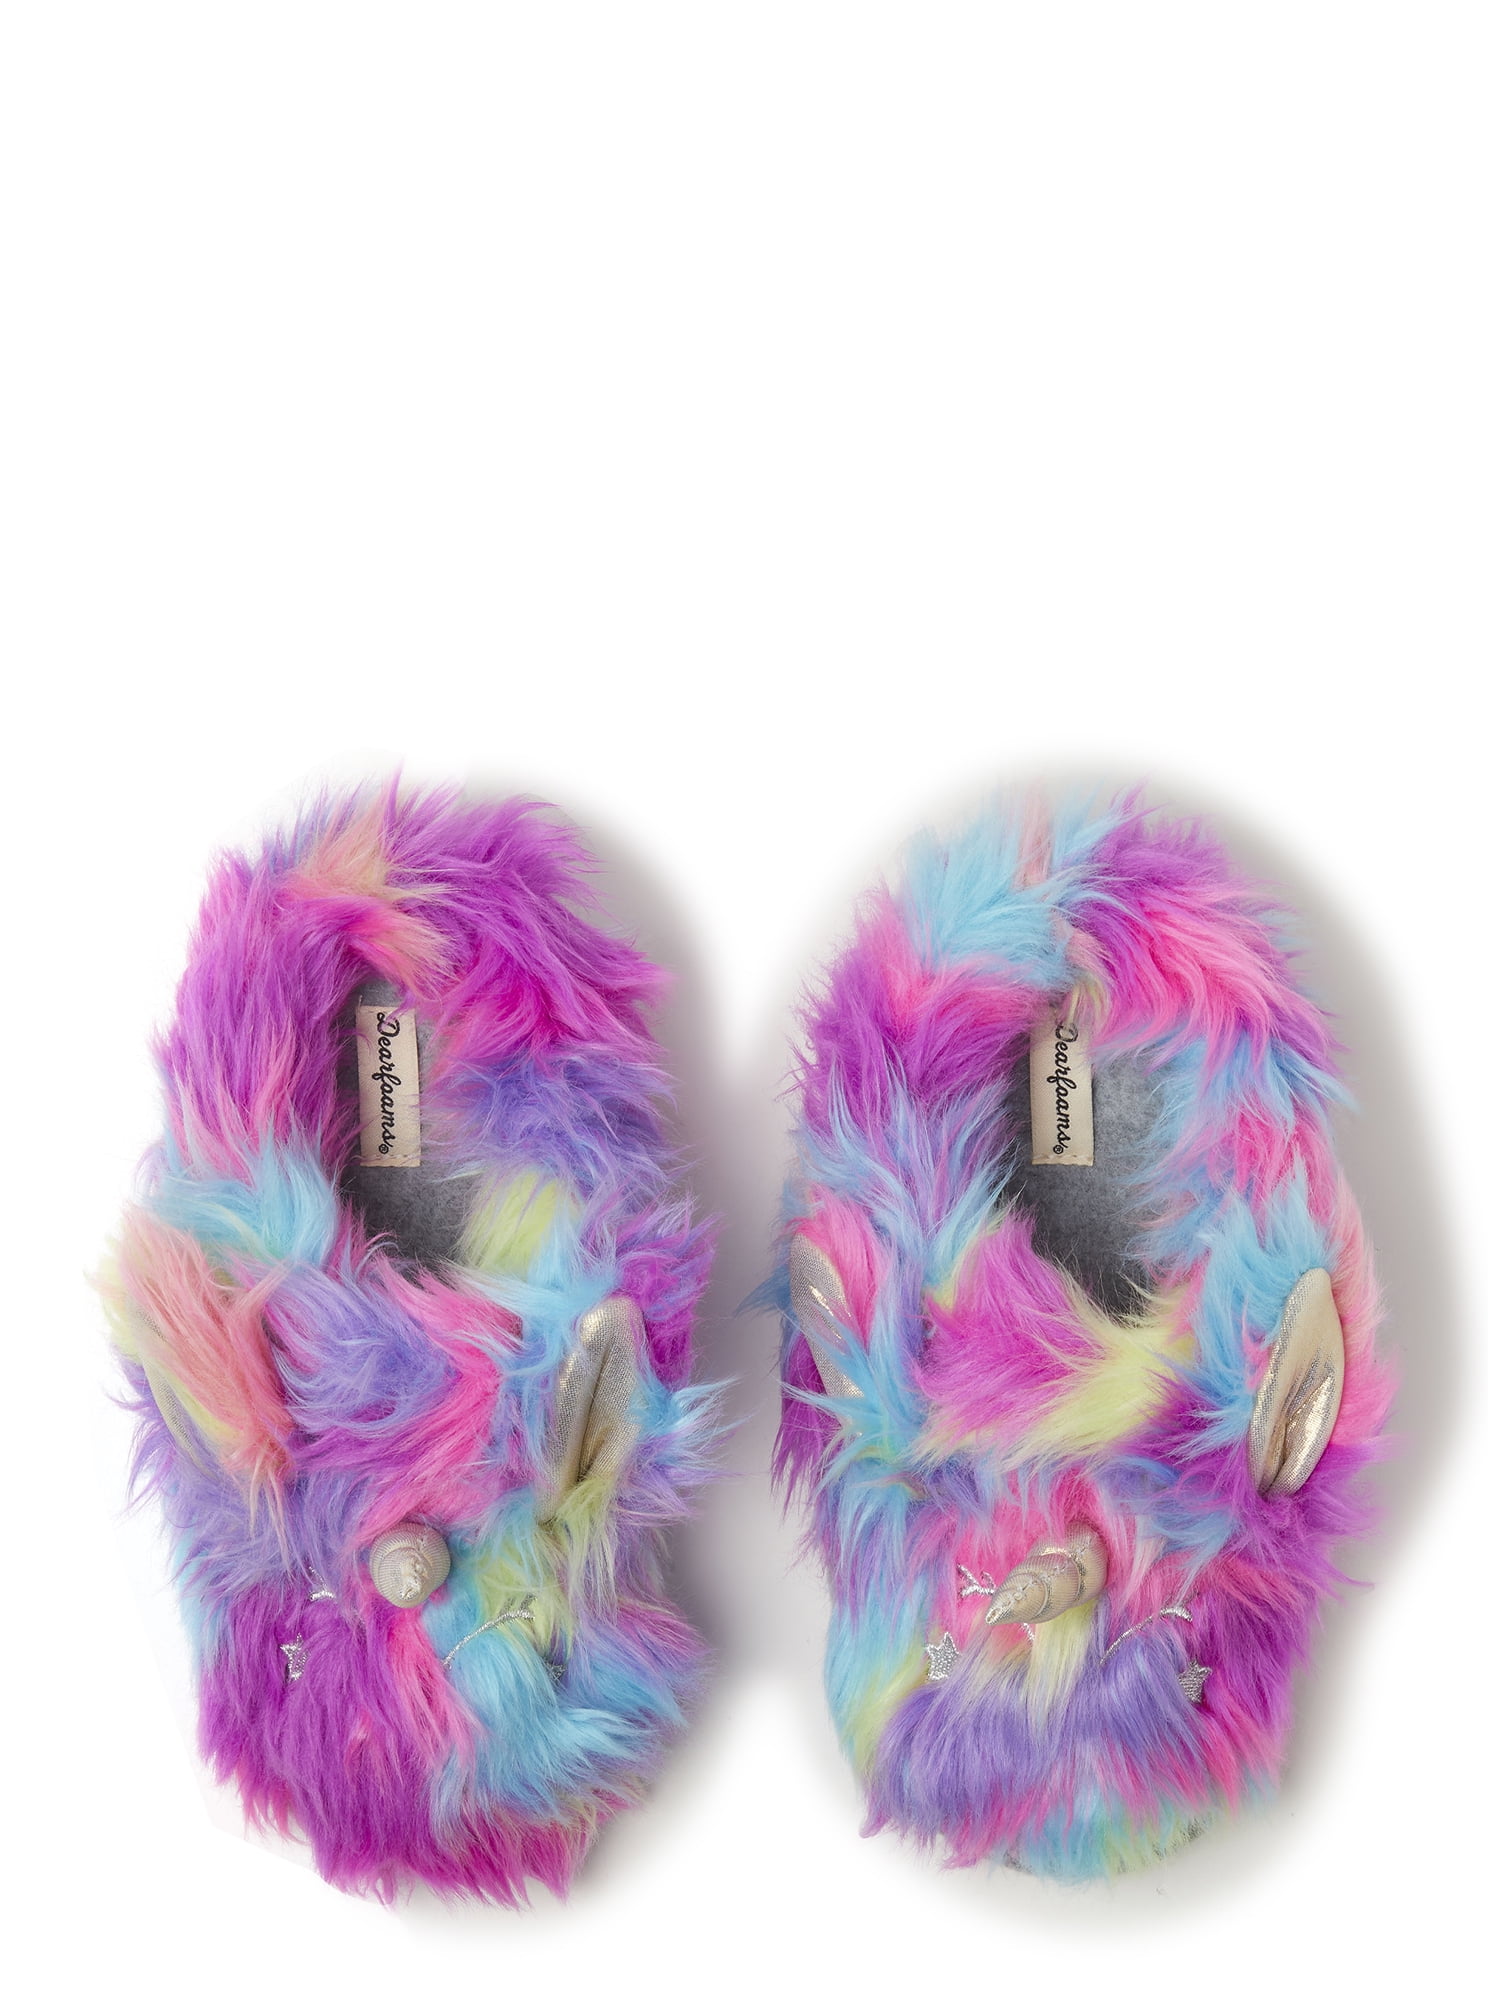 Unicorn Girls House Slippers Faux Fur Plush Sz 7-8 Deerforms Shoes Christmas